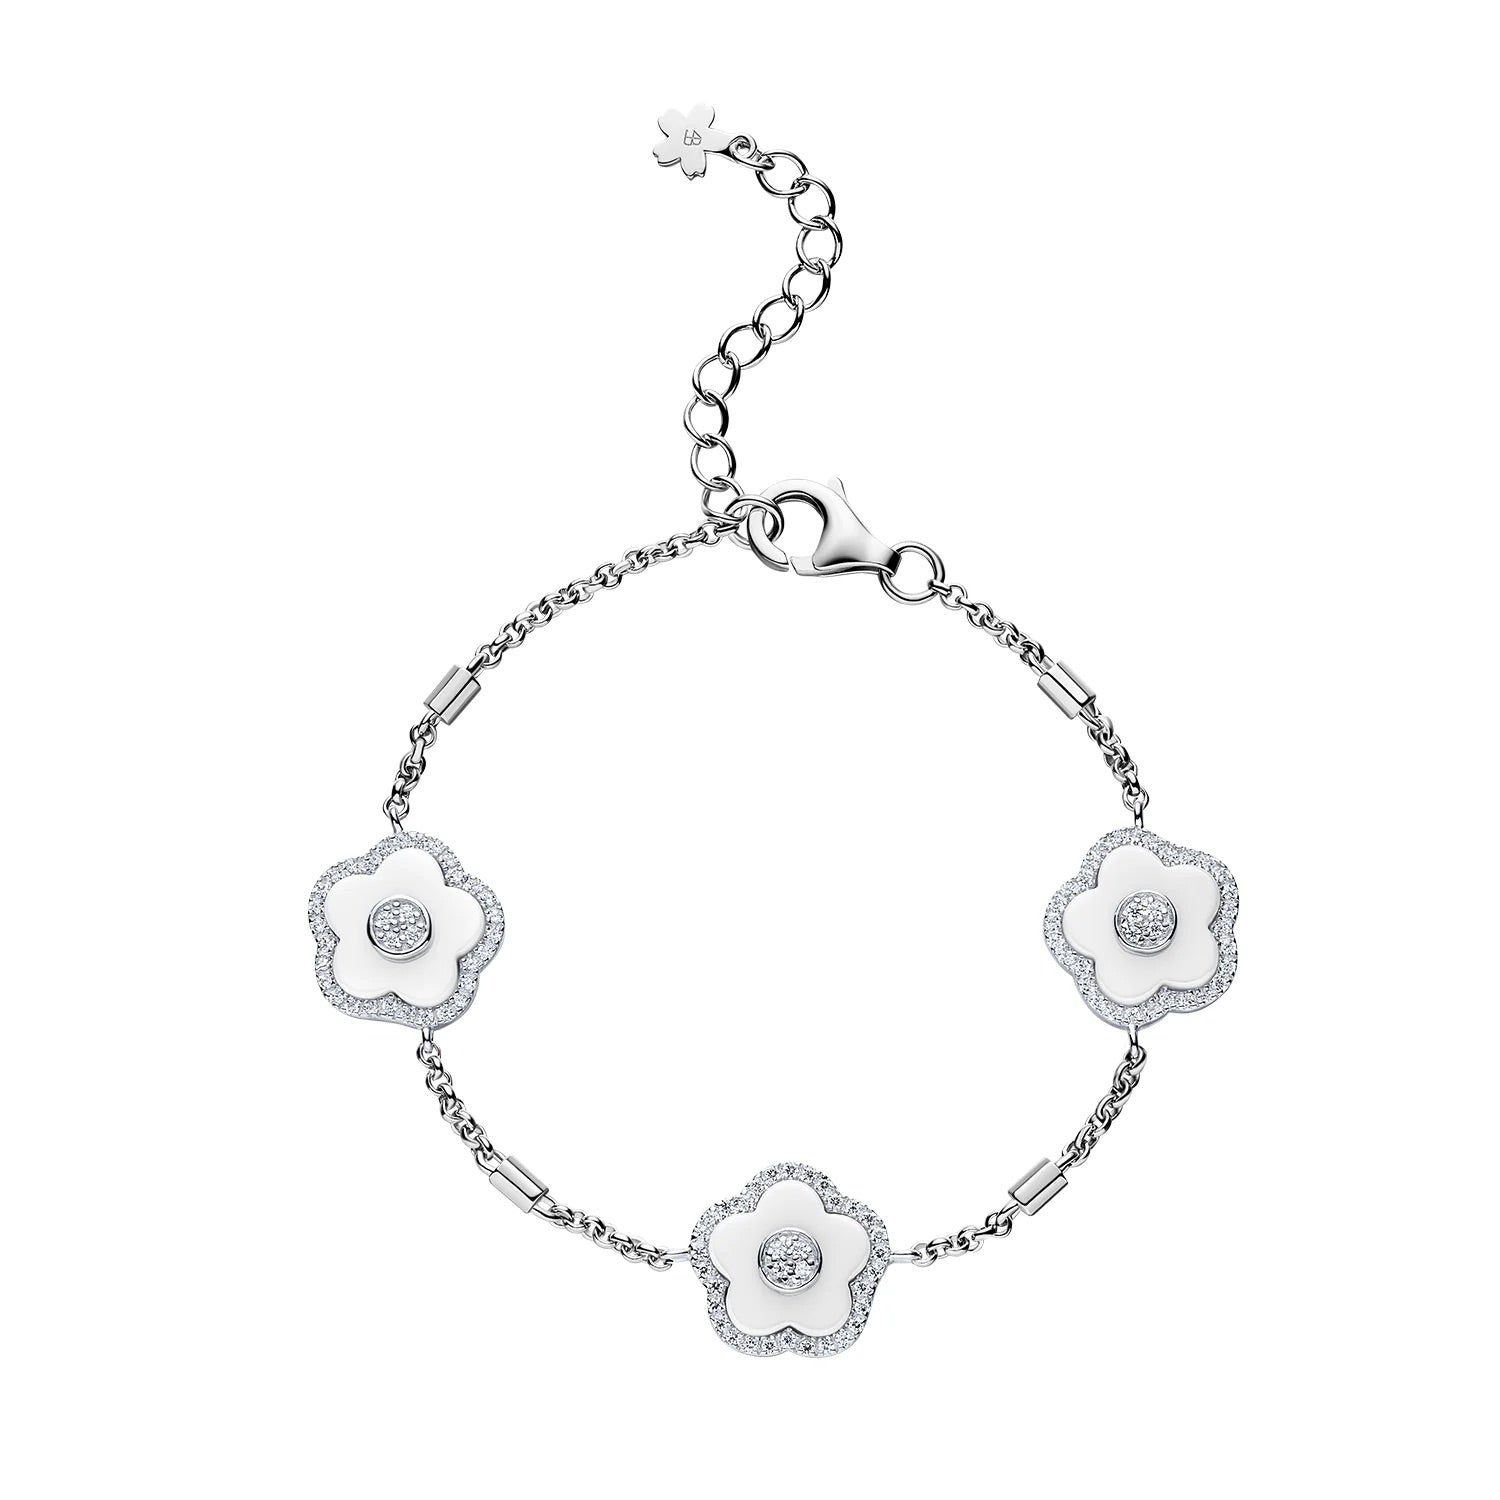 White Diamond Cherry Blossom Ceramic Watch With Flower Ceramic Bracelet